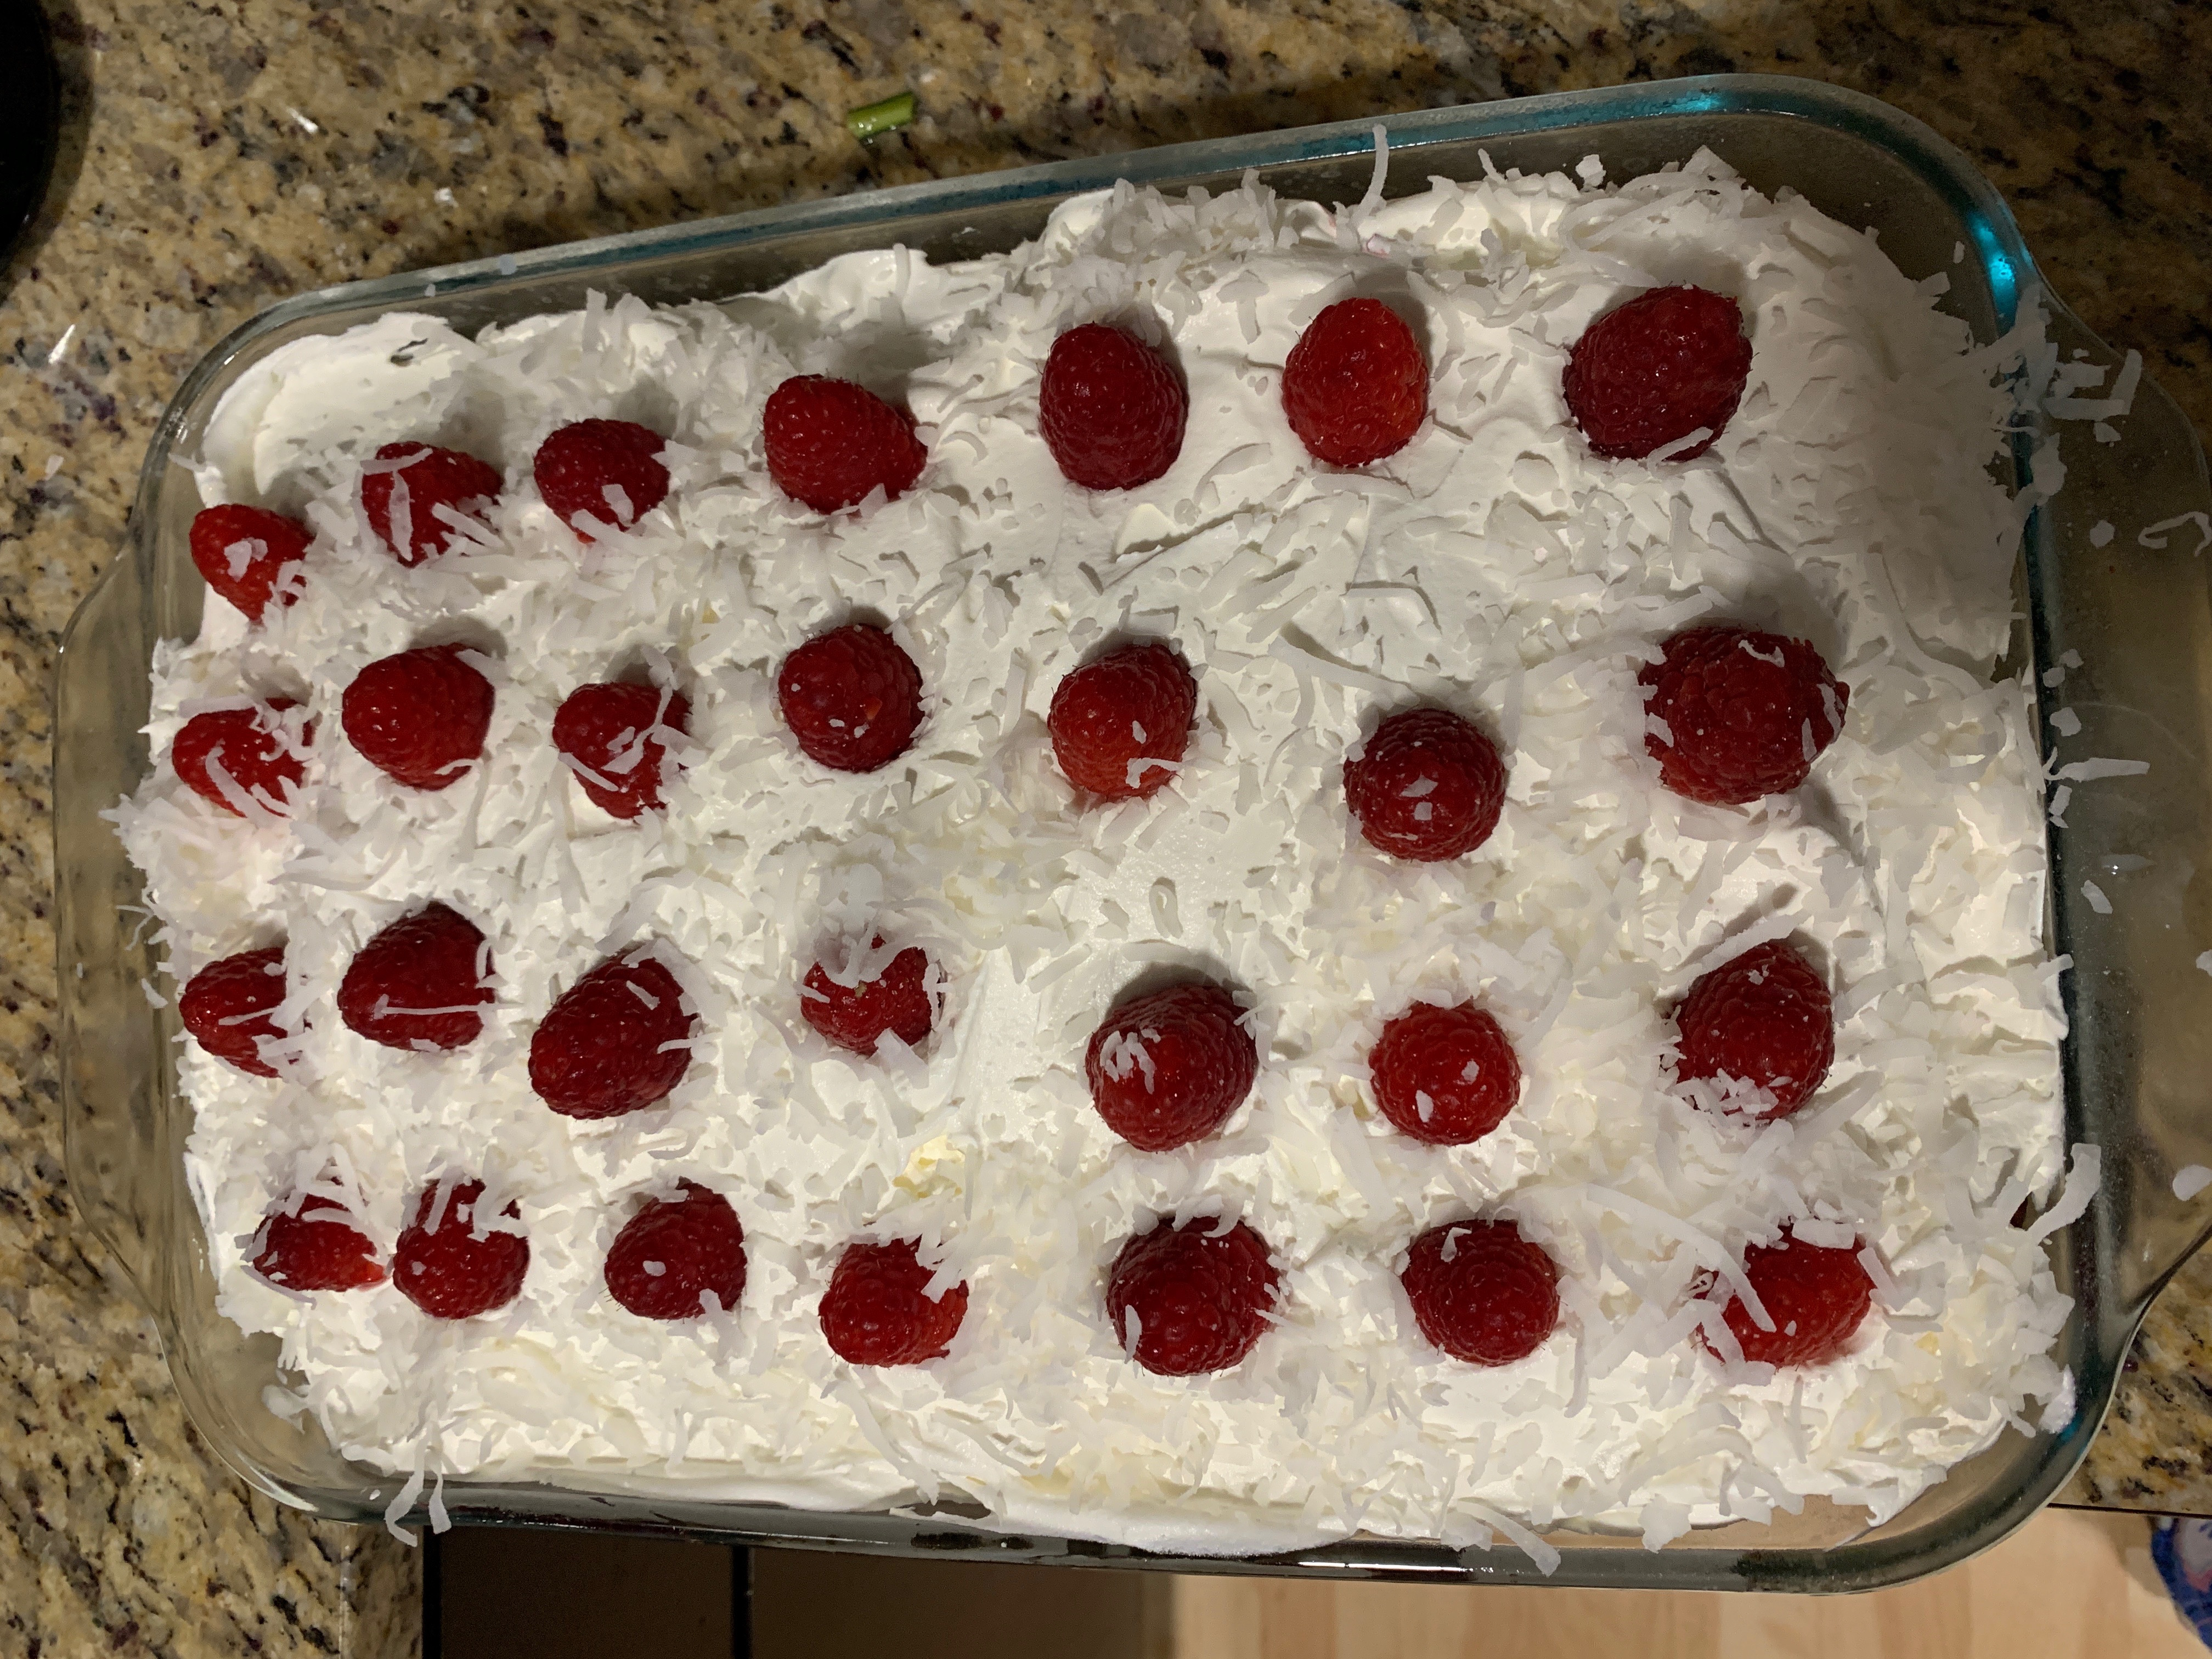 Raspberry Coconut Poke Cake